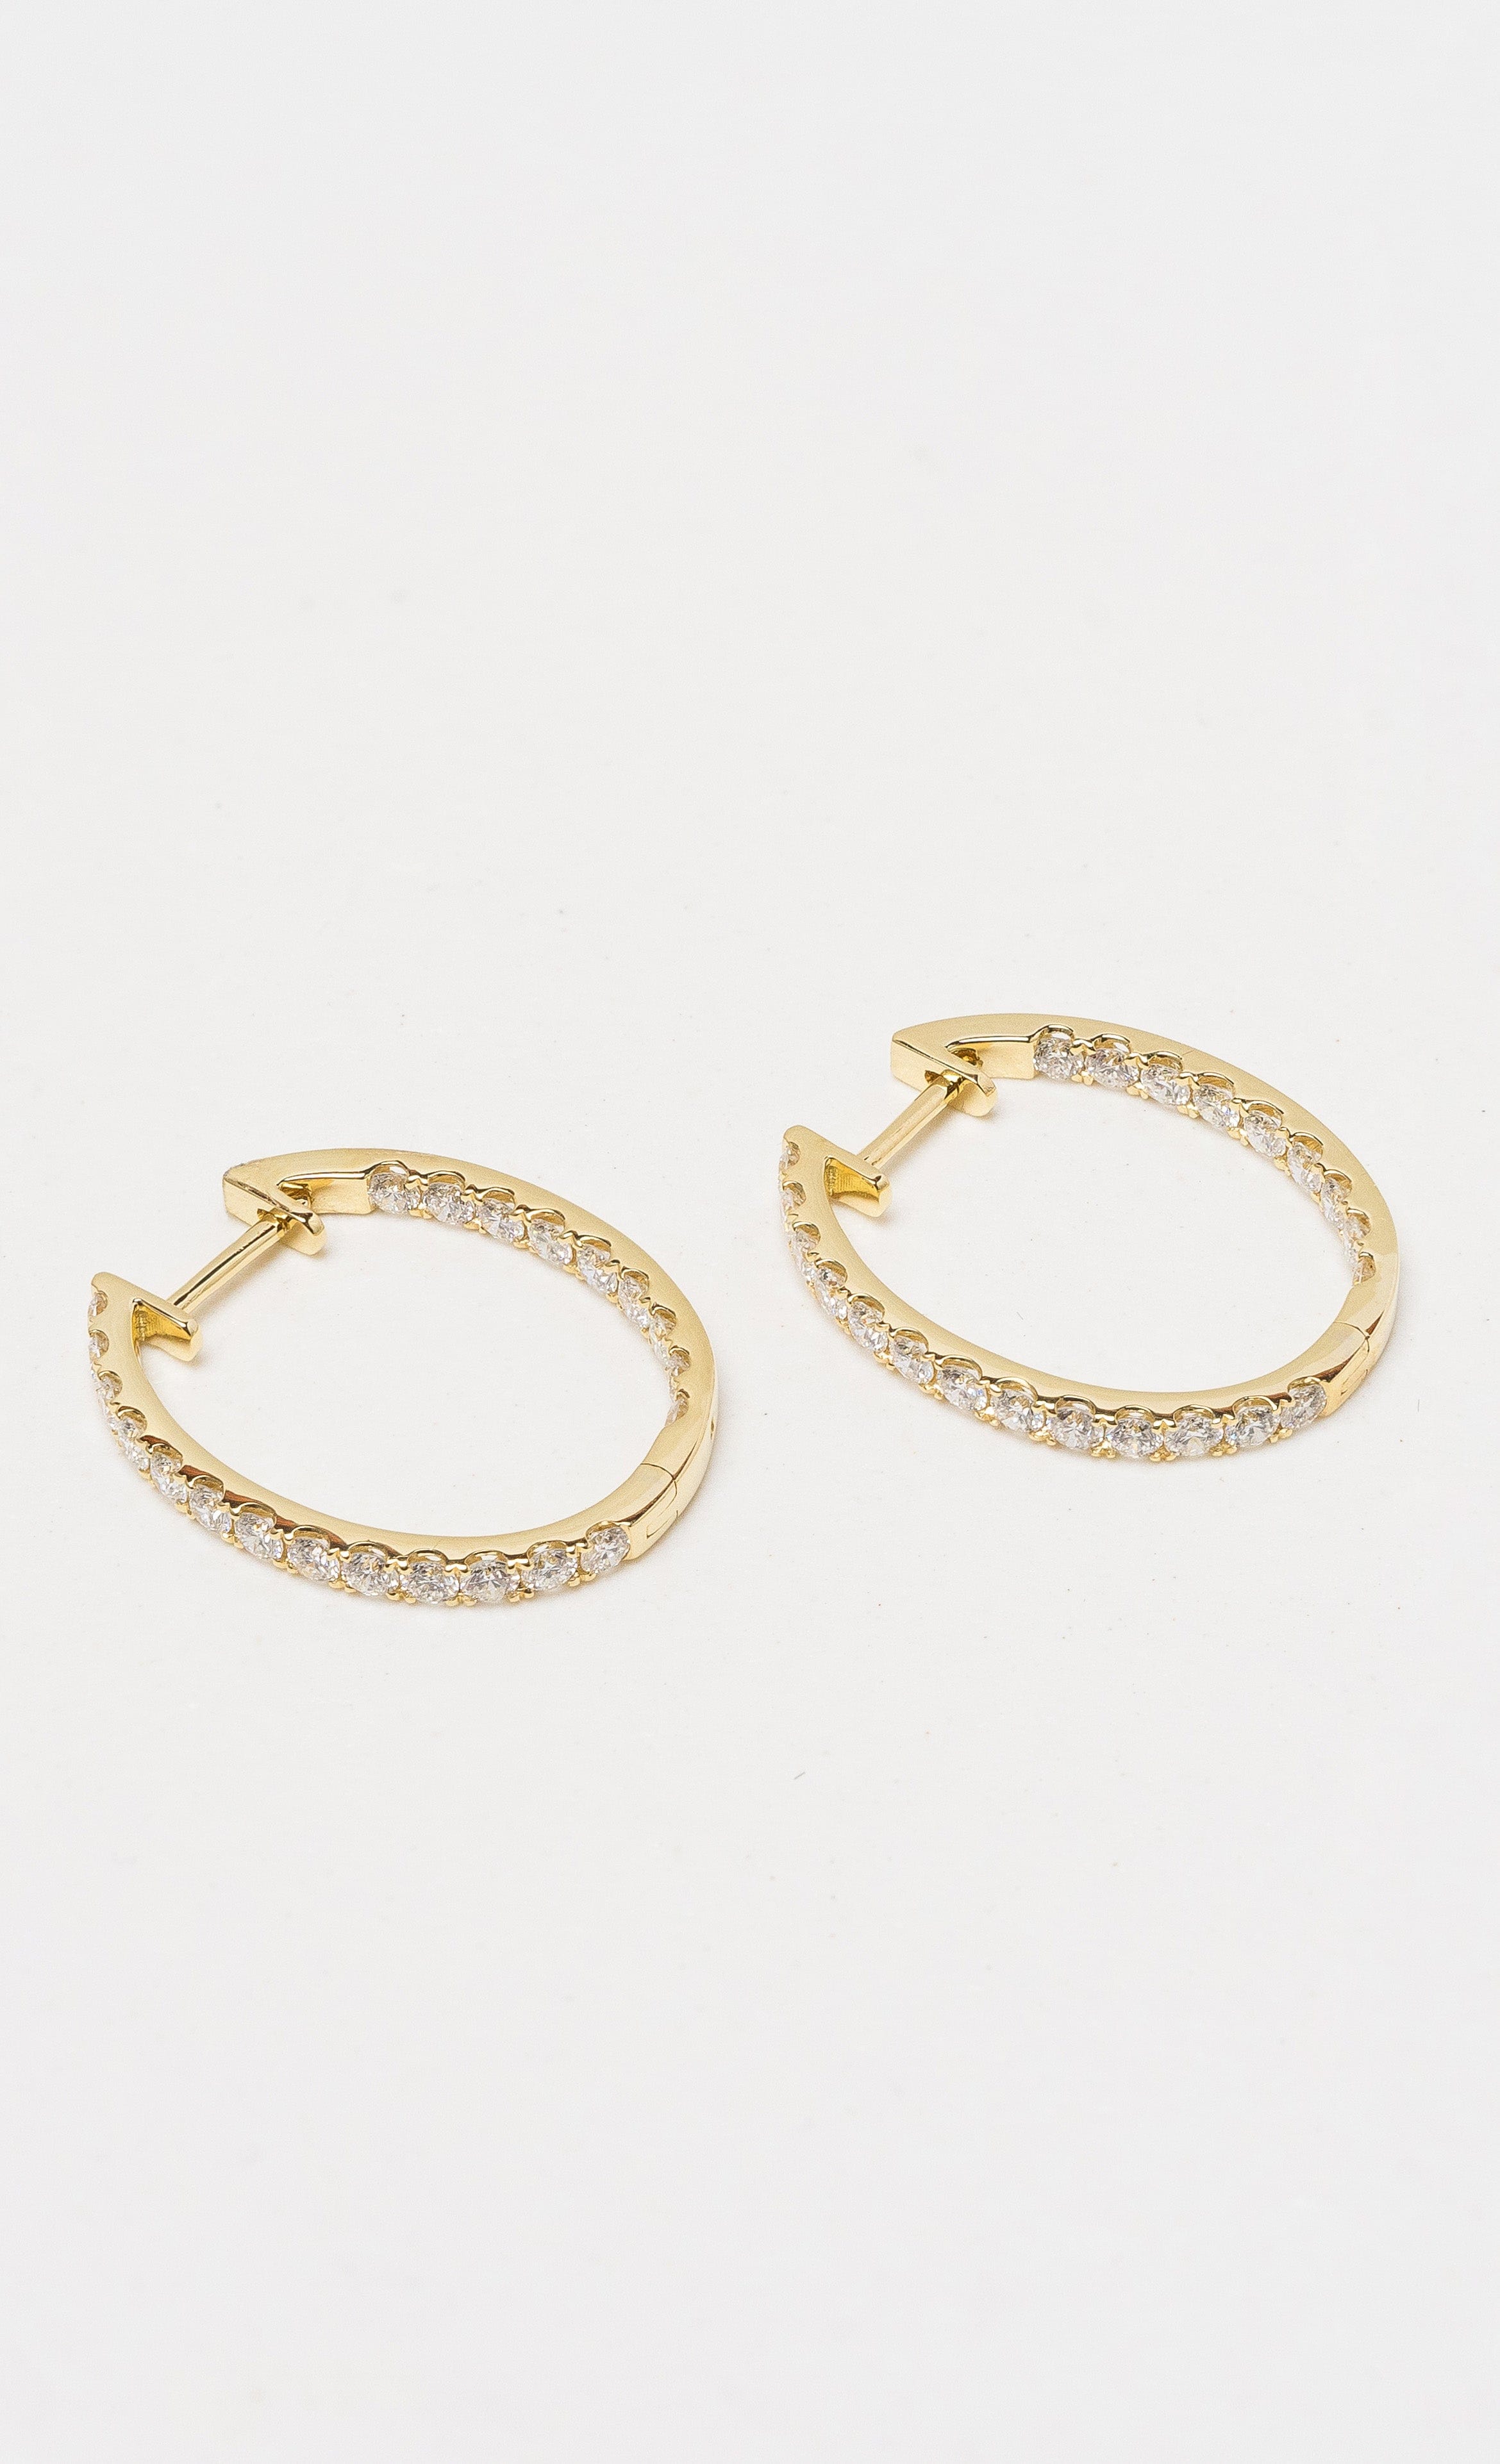 Hogans Family Jewellers 18K YG Diamond Hoop Earrings